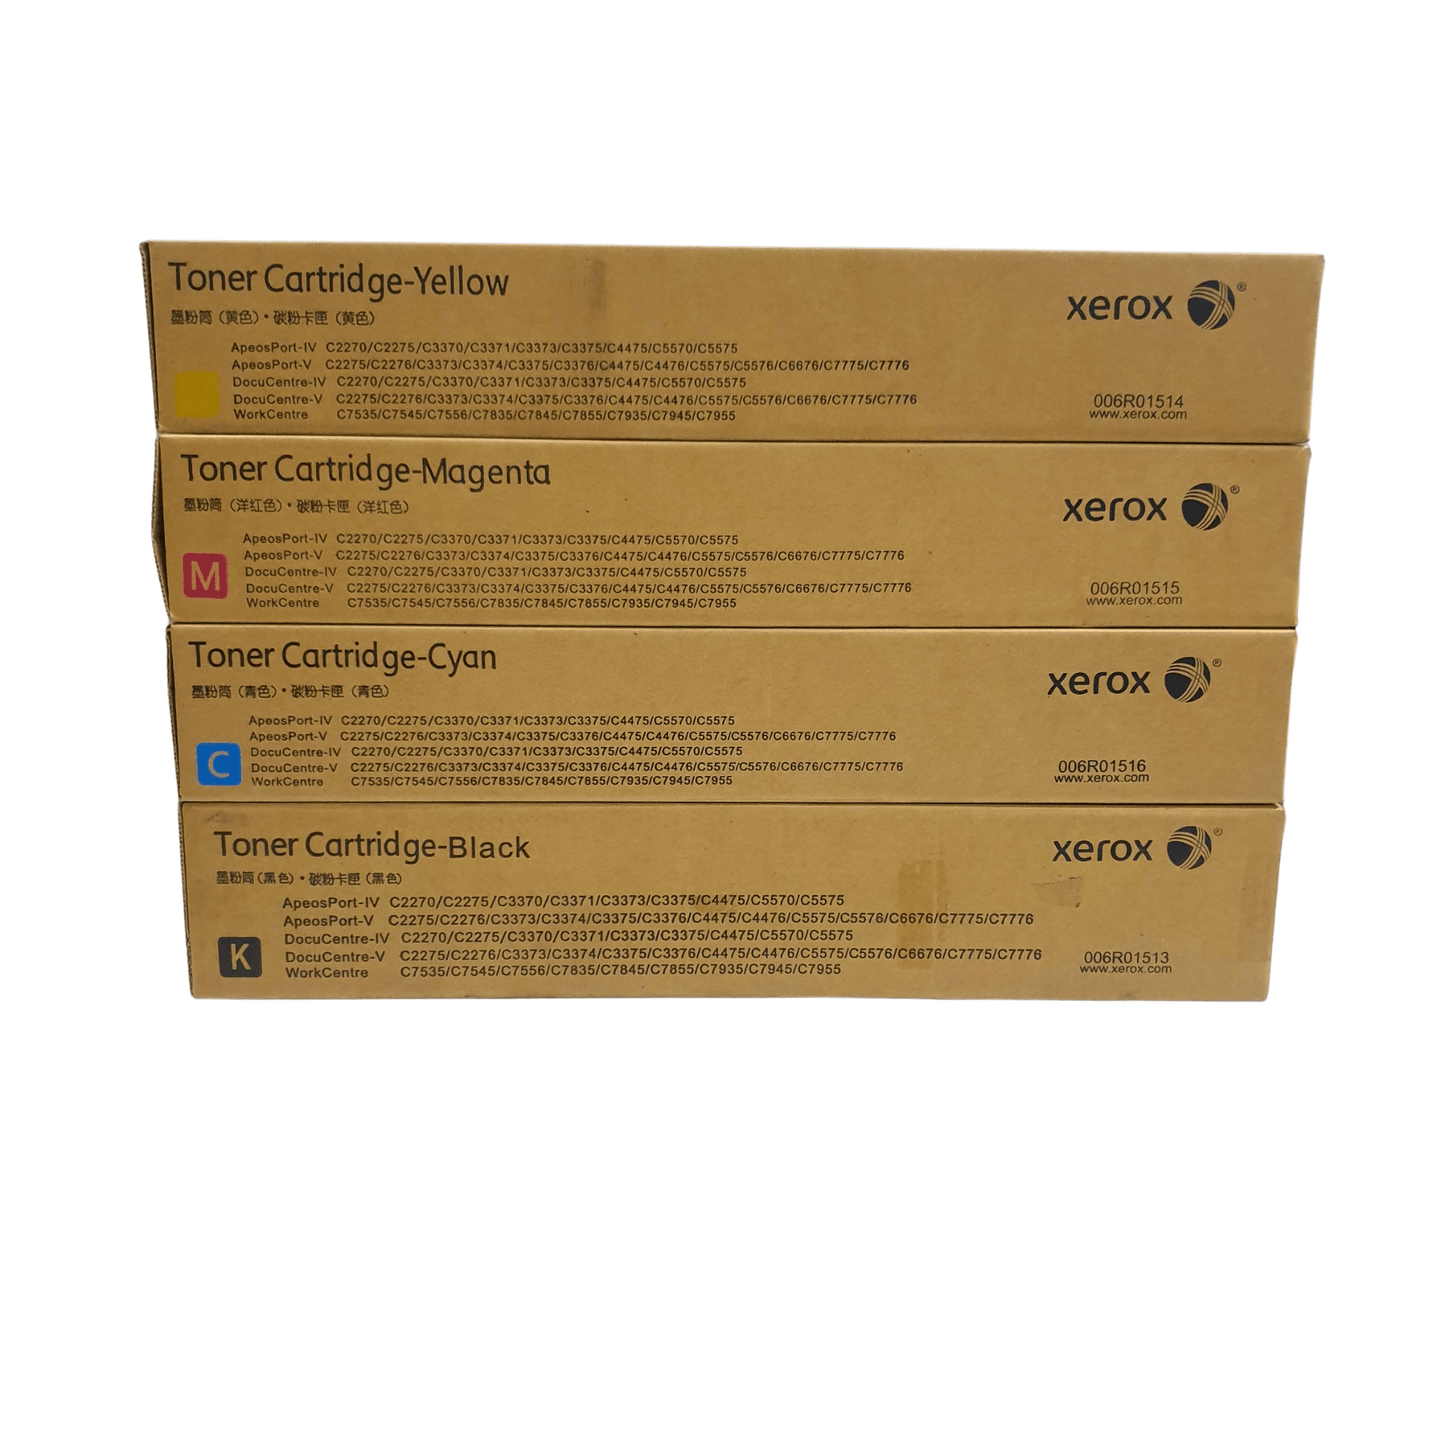 Xerox Toner Cartridge WC 7545/7845 YMCK USA VERSION - 𝐏𝐑𝐄𝐌𝐈𝐄𝐑 𝐓𝐑𝐀𝐃𝐄𝐑𝐒